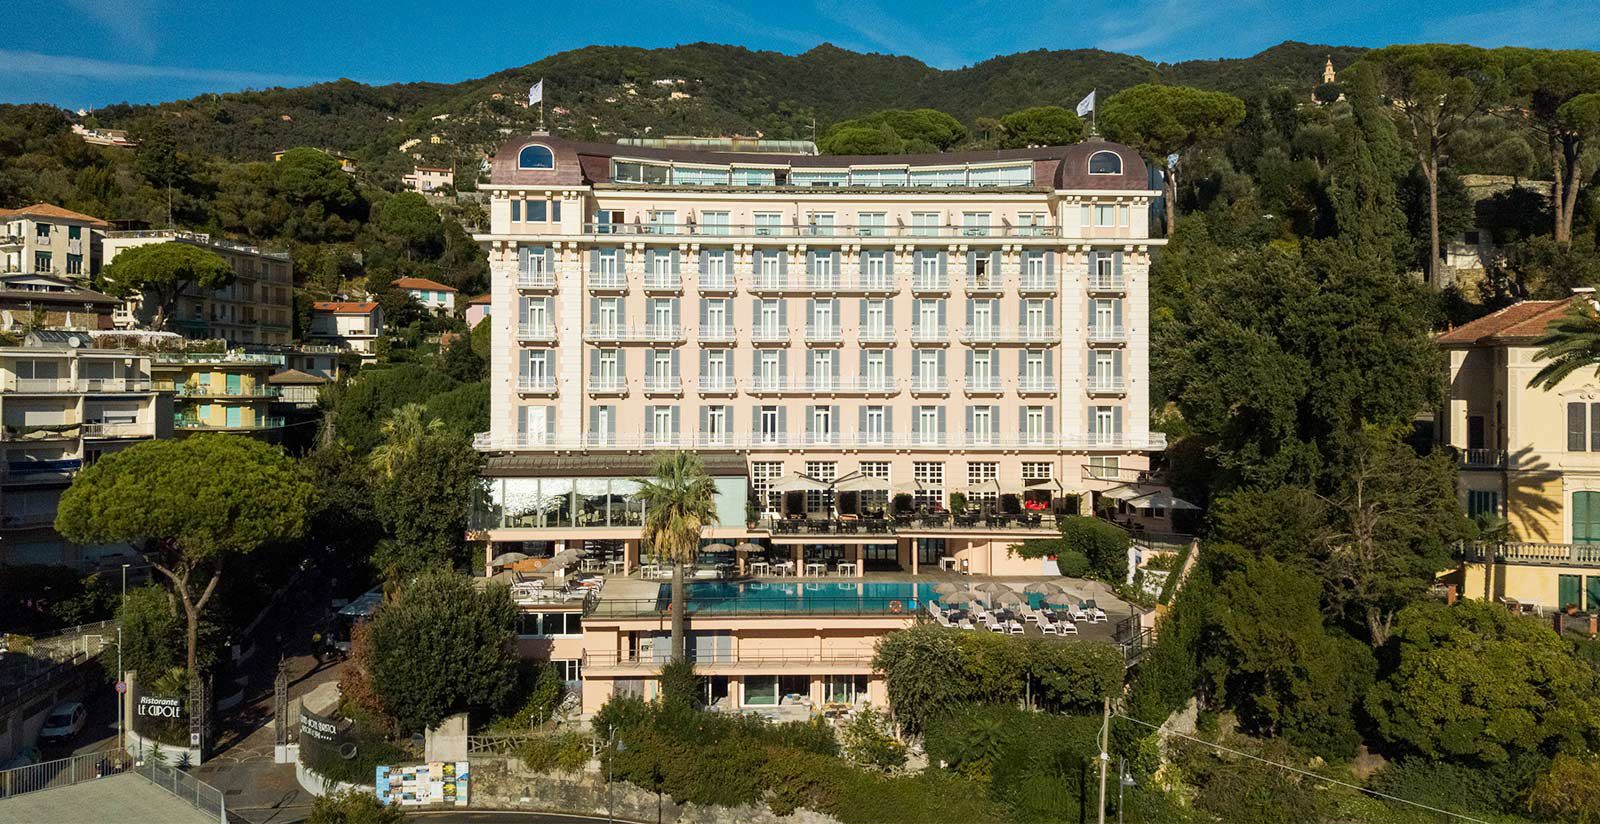 Grand Hotel Bristol - 5-star resort for holidays in Liguria 5